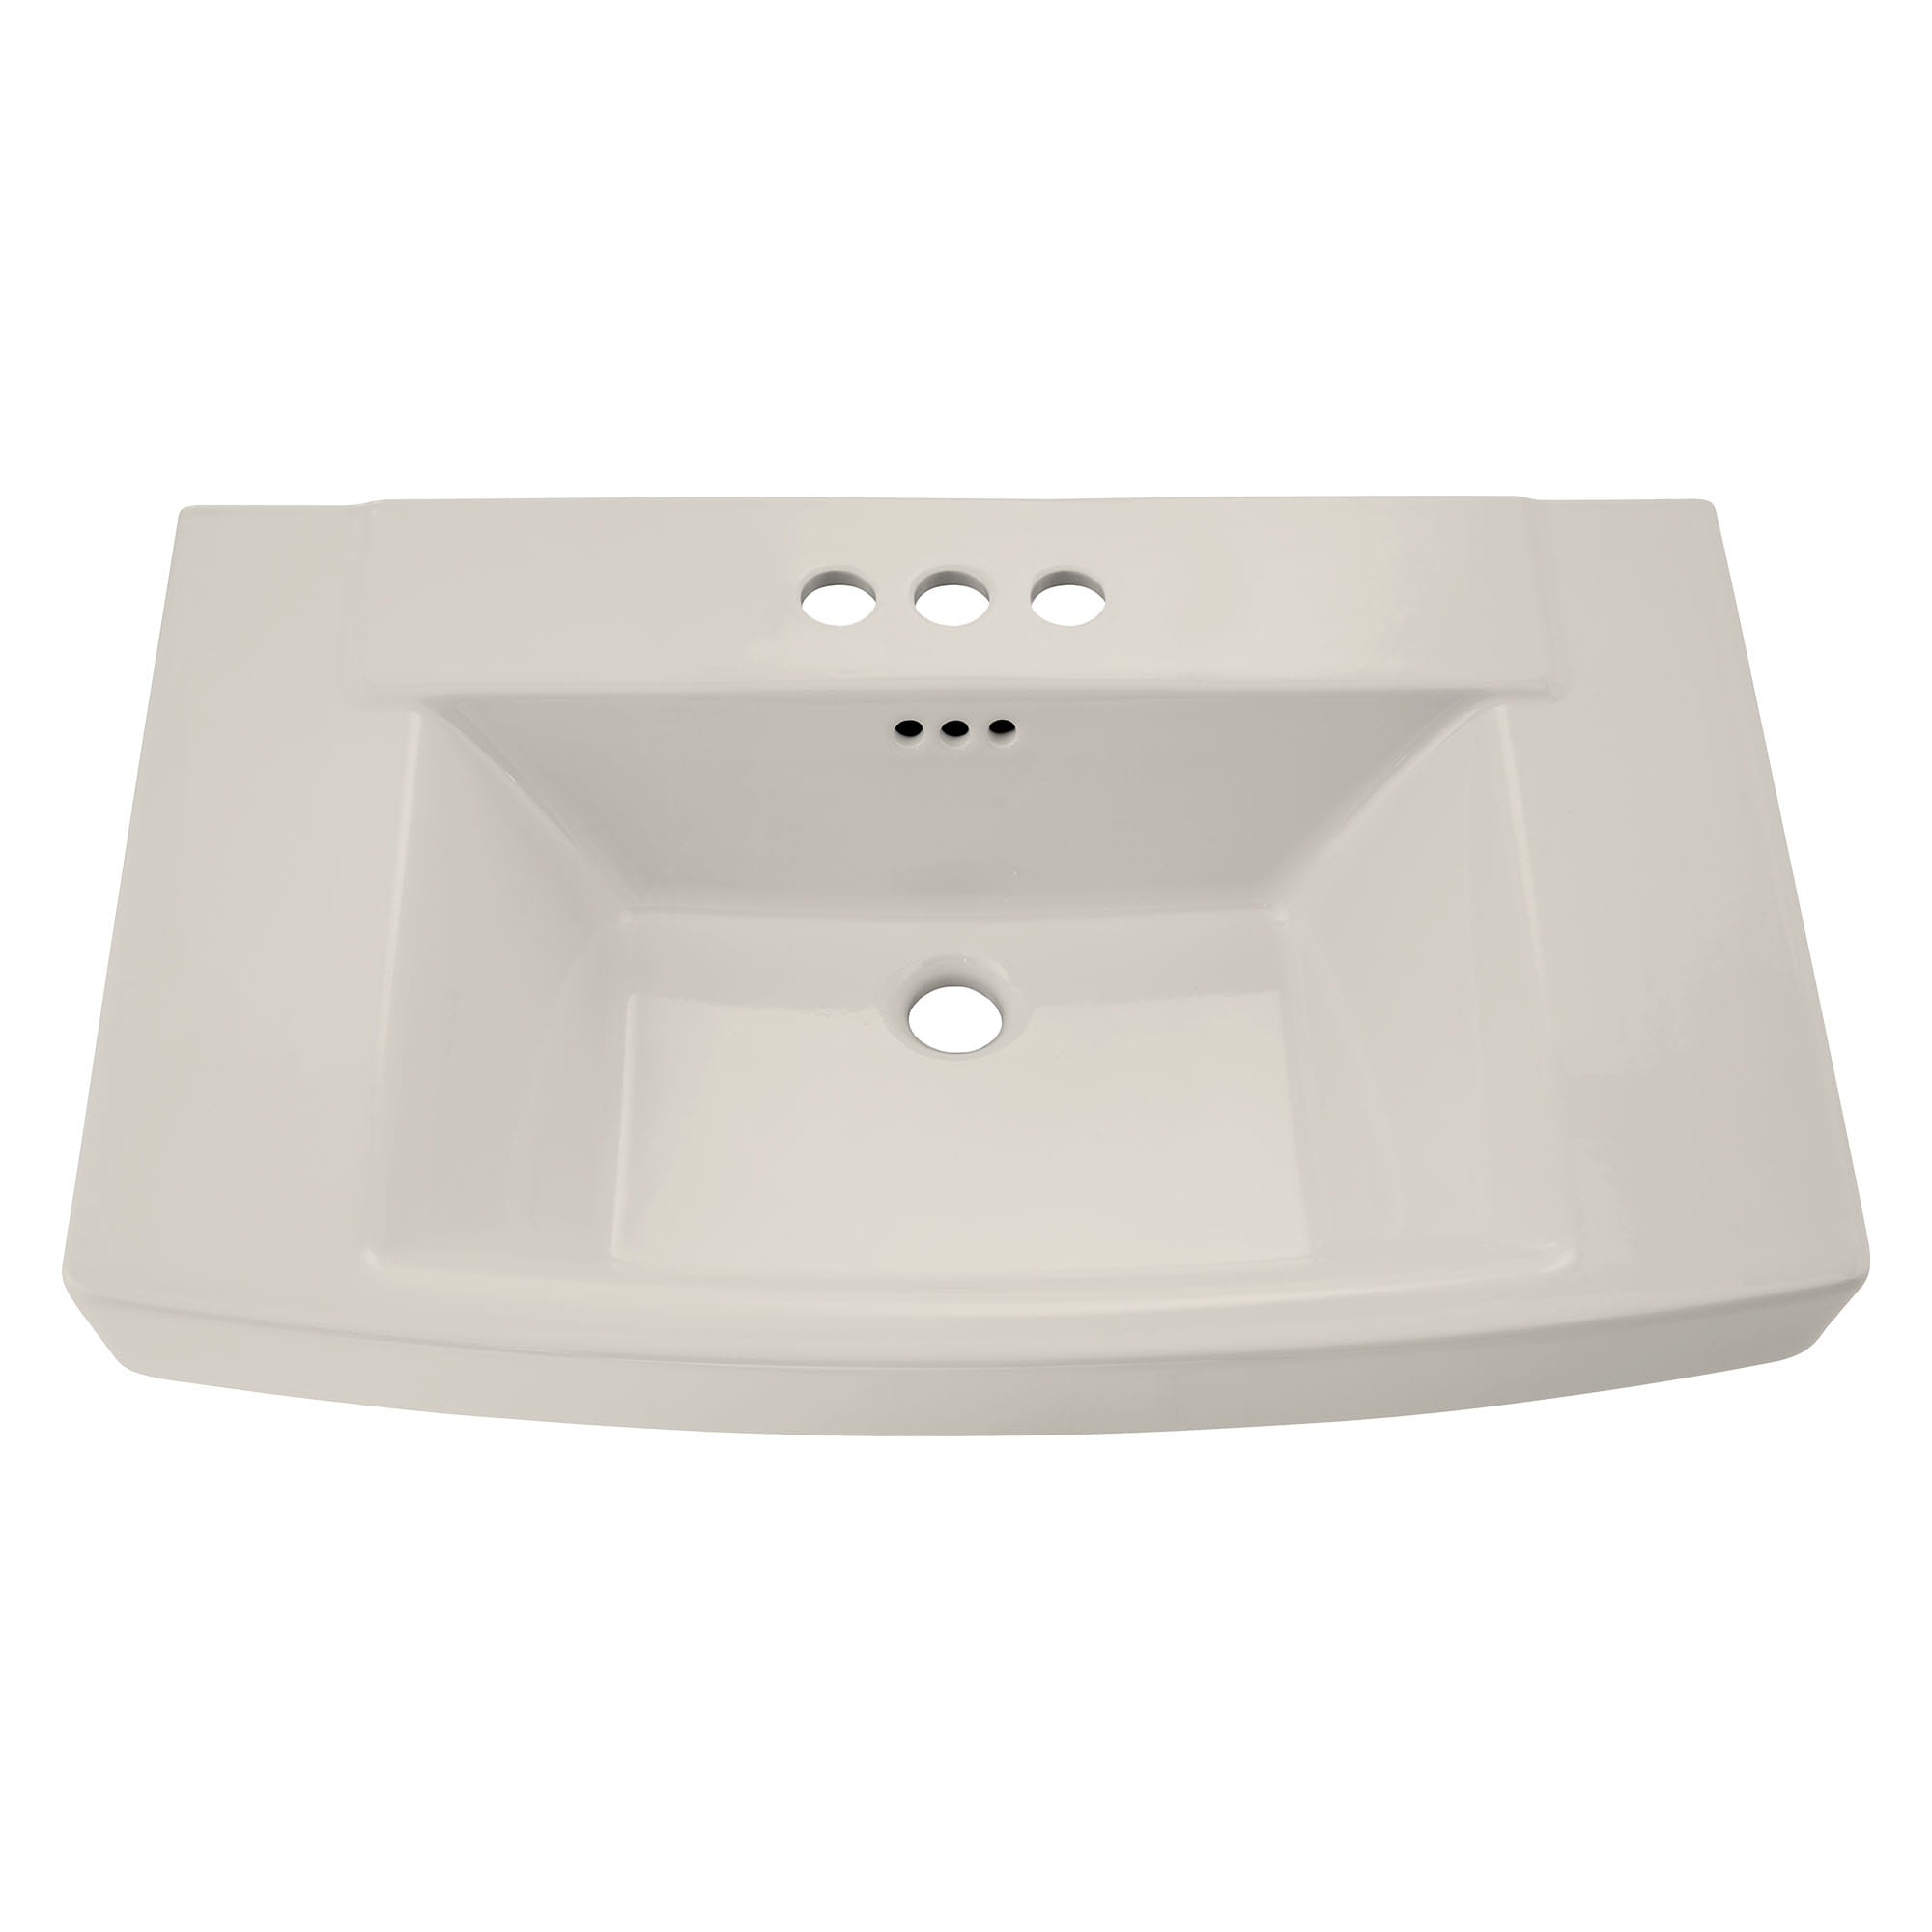 Townsend® 4-Inch Centerset Pedestal Sink Top